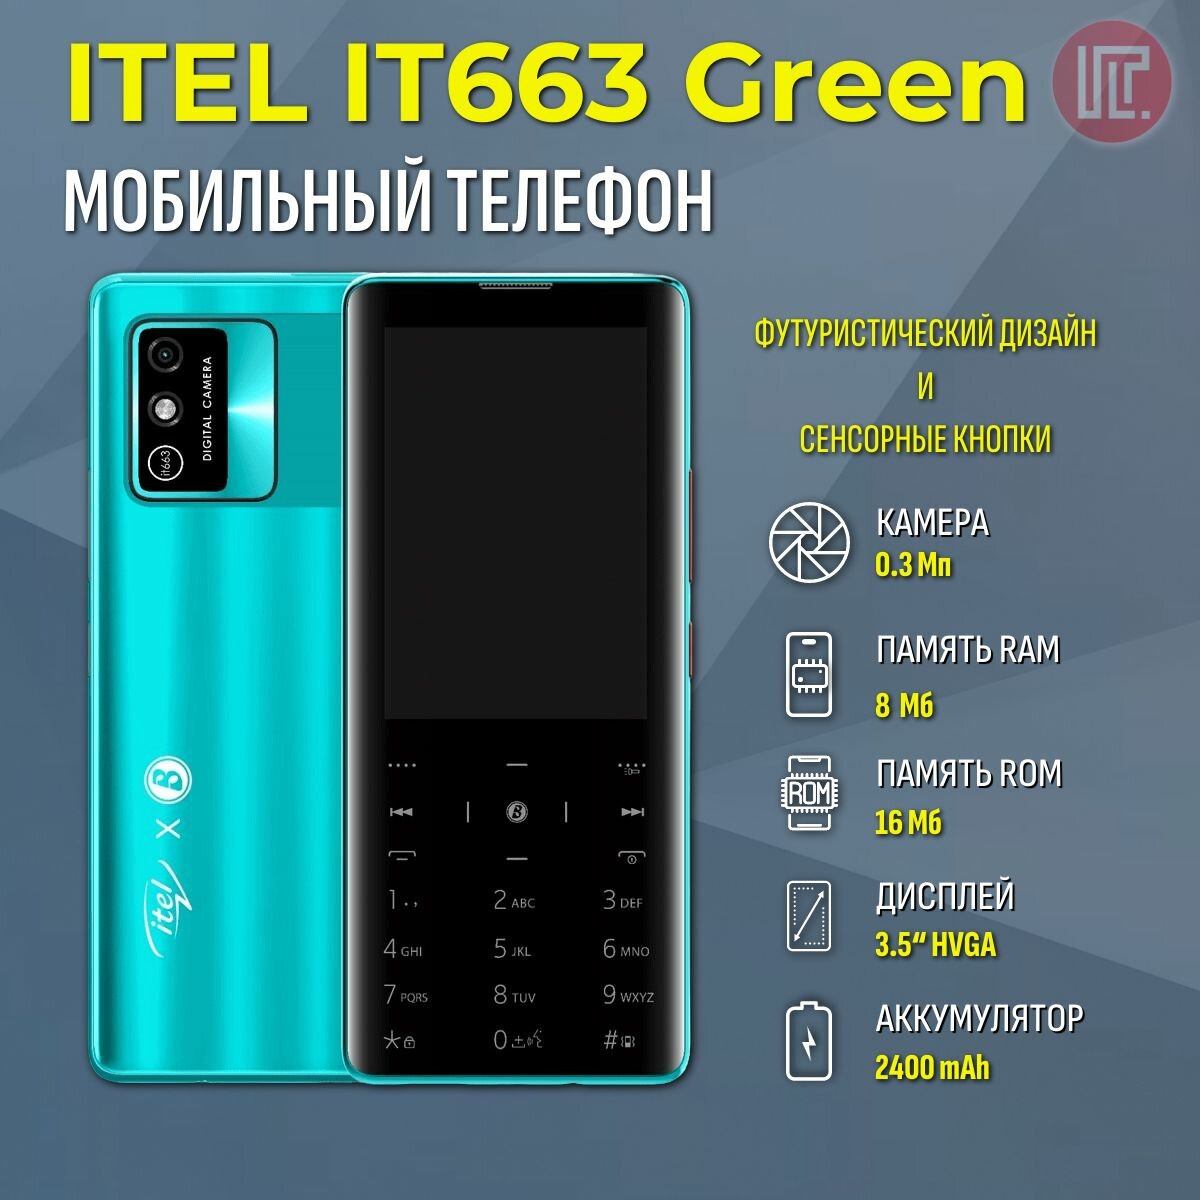 Сотовый телефон Itel IT663 Green